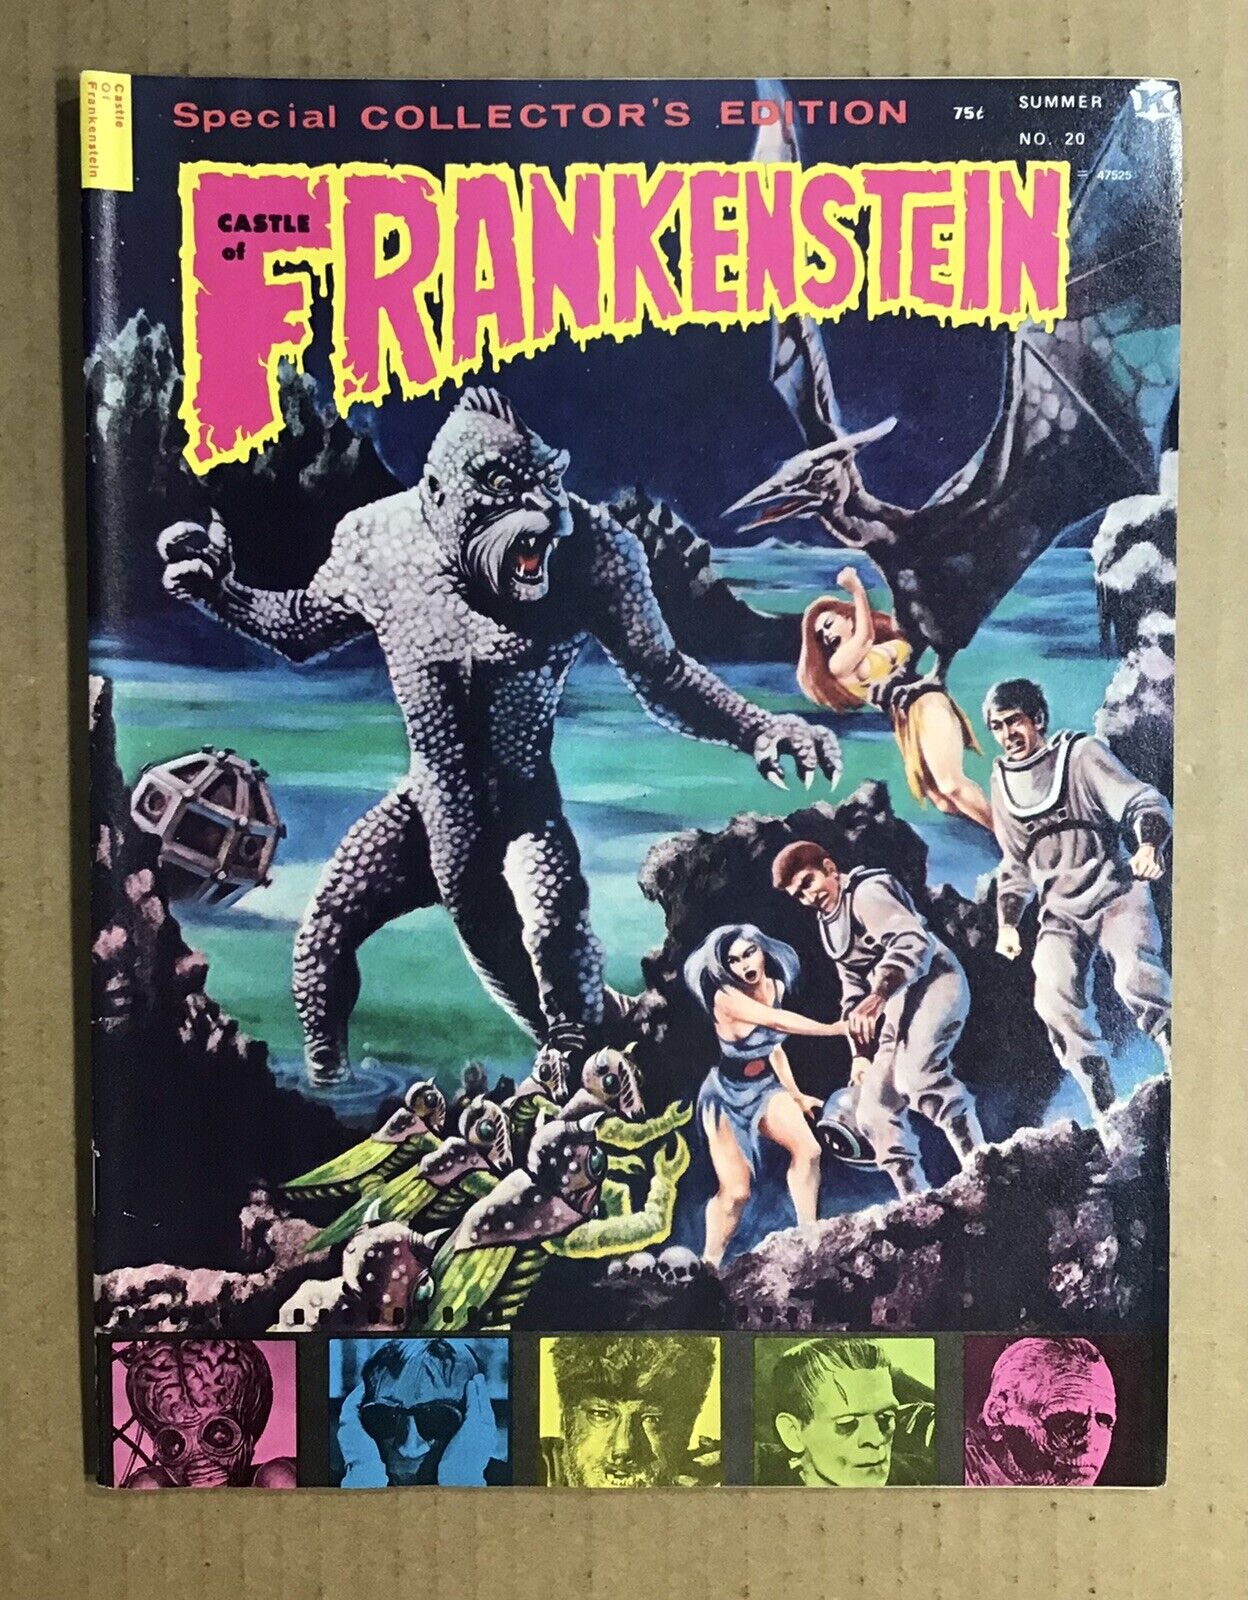 Castle of Frankenstein #20 ~Ray Harryhausen, Grave of The Vampire ~ VG